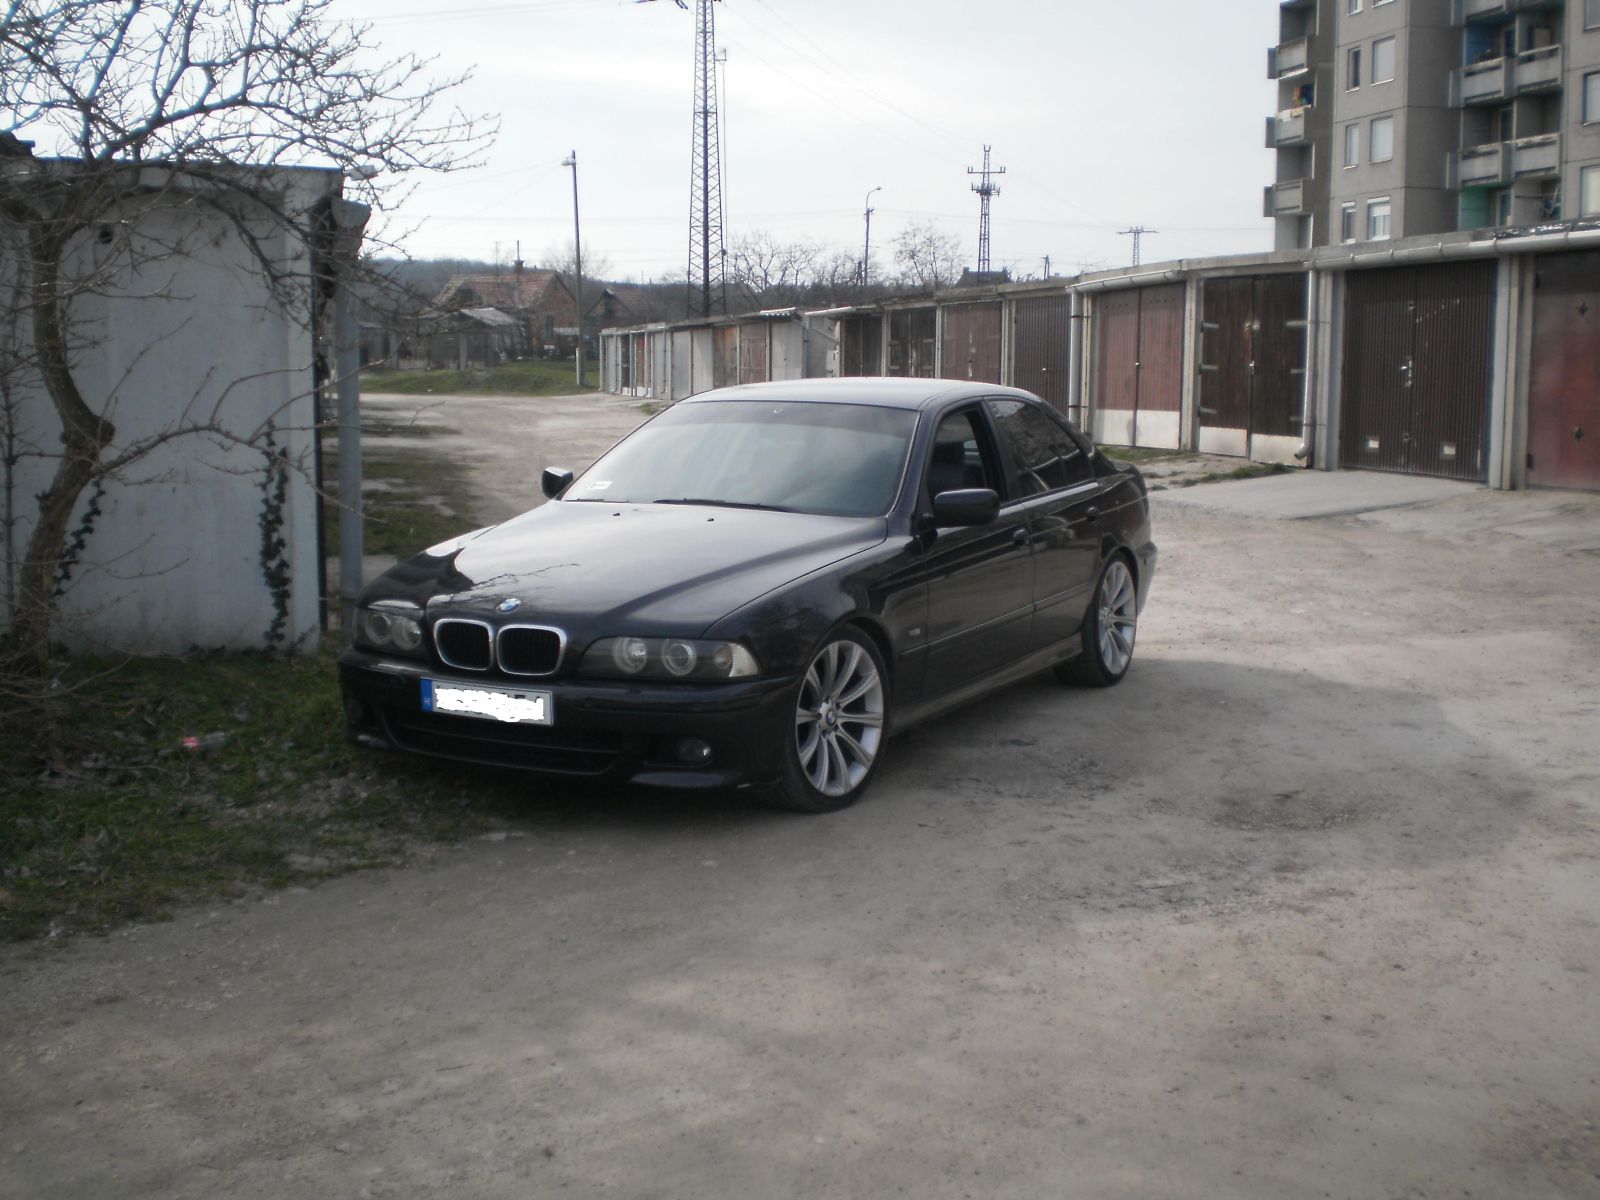 BMW Iceman84 